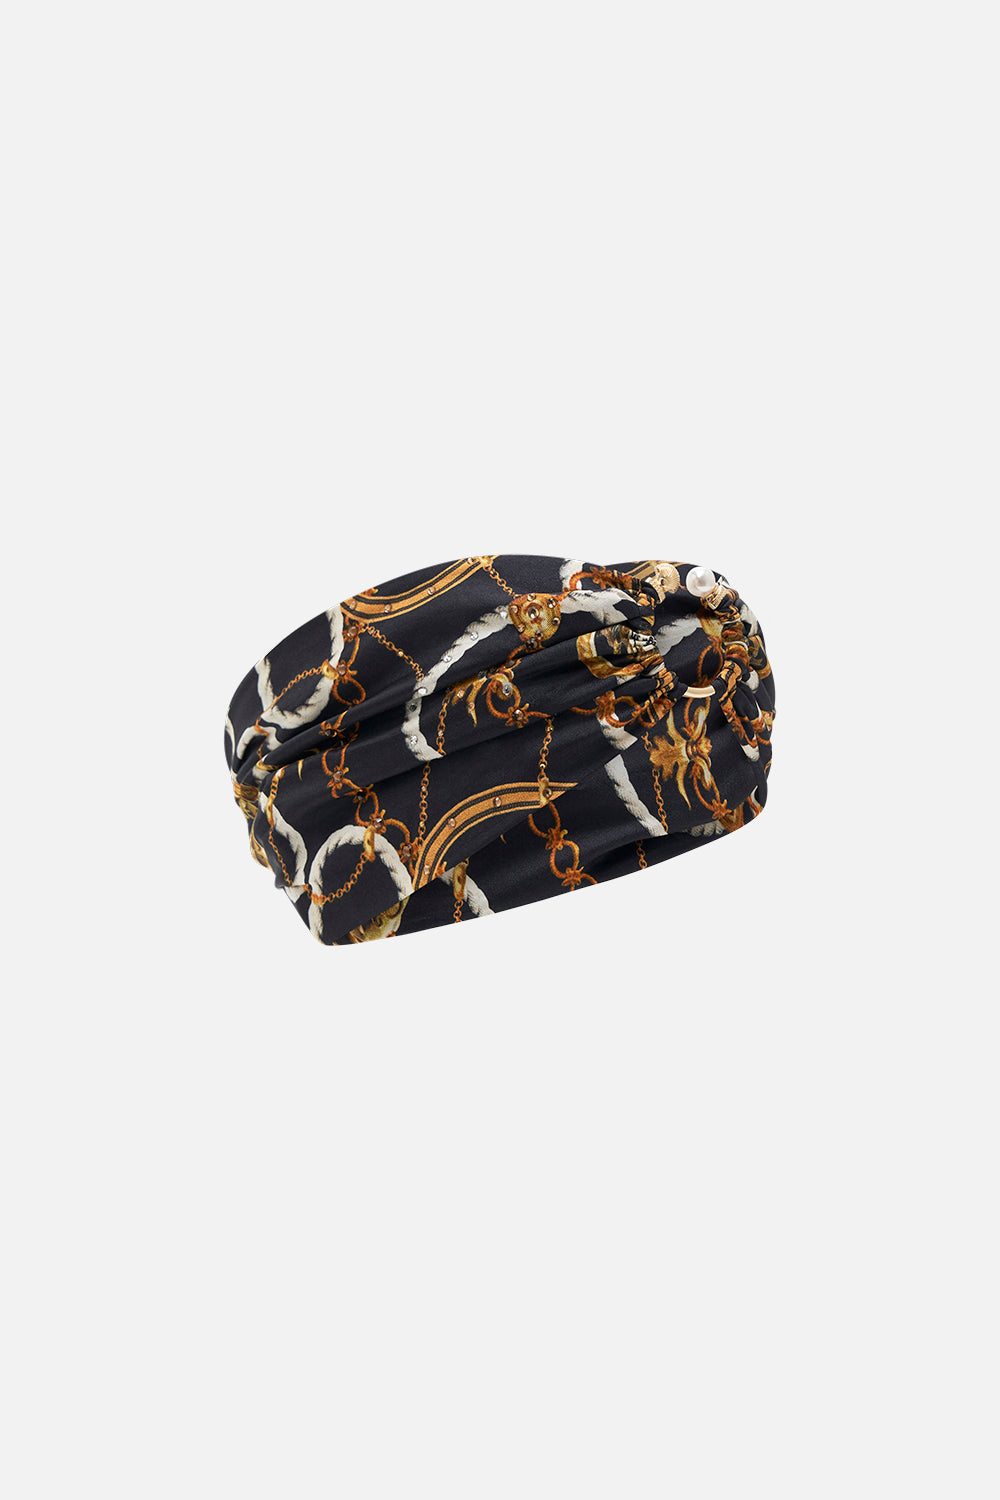 Product view of CAMILLA ring headband in Coast to Coast print